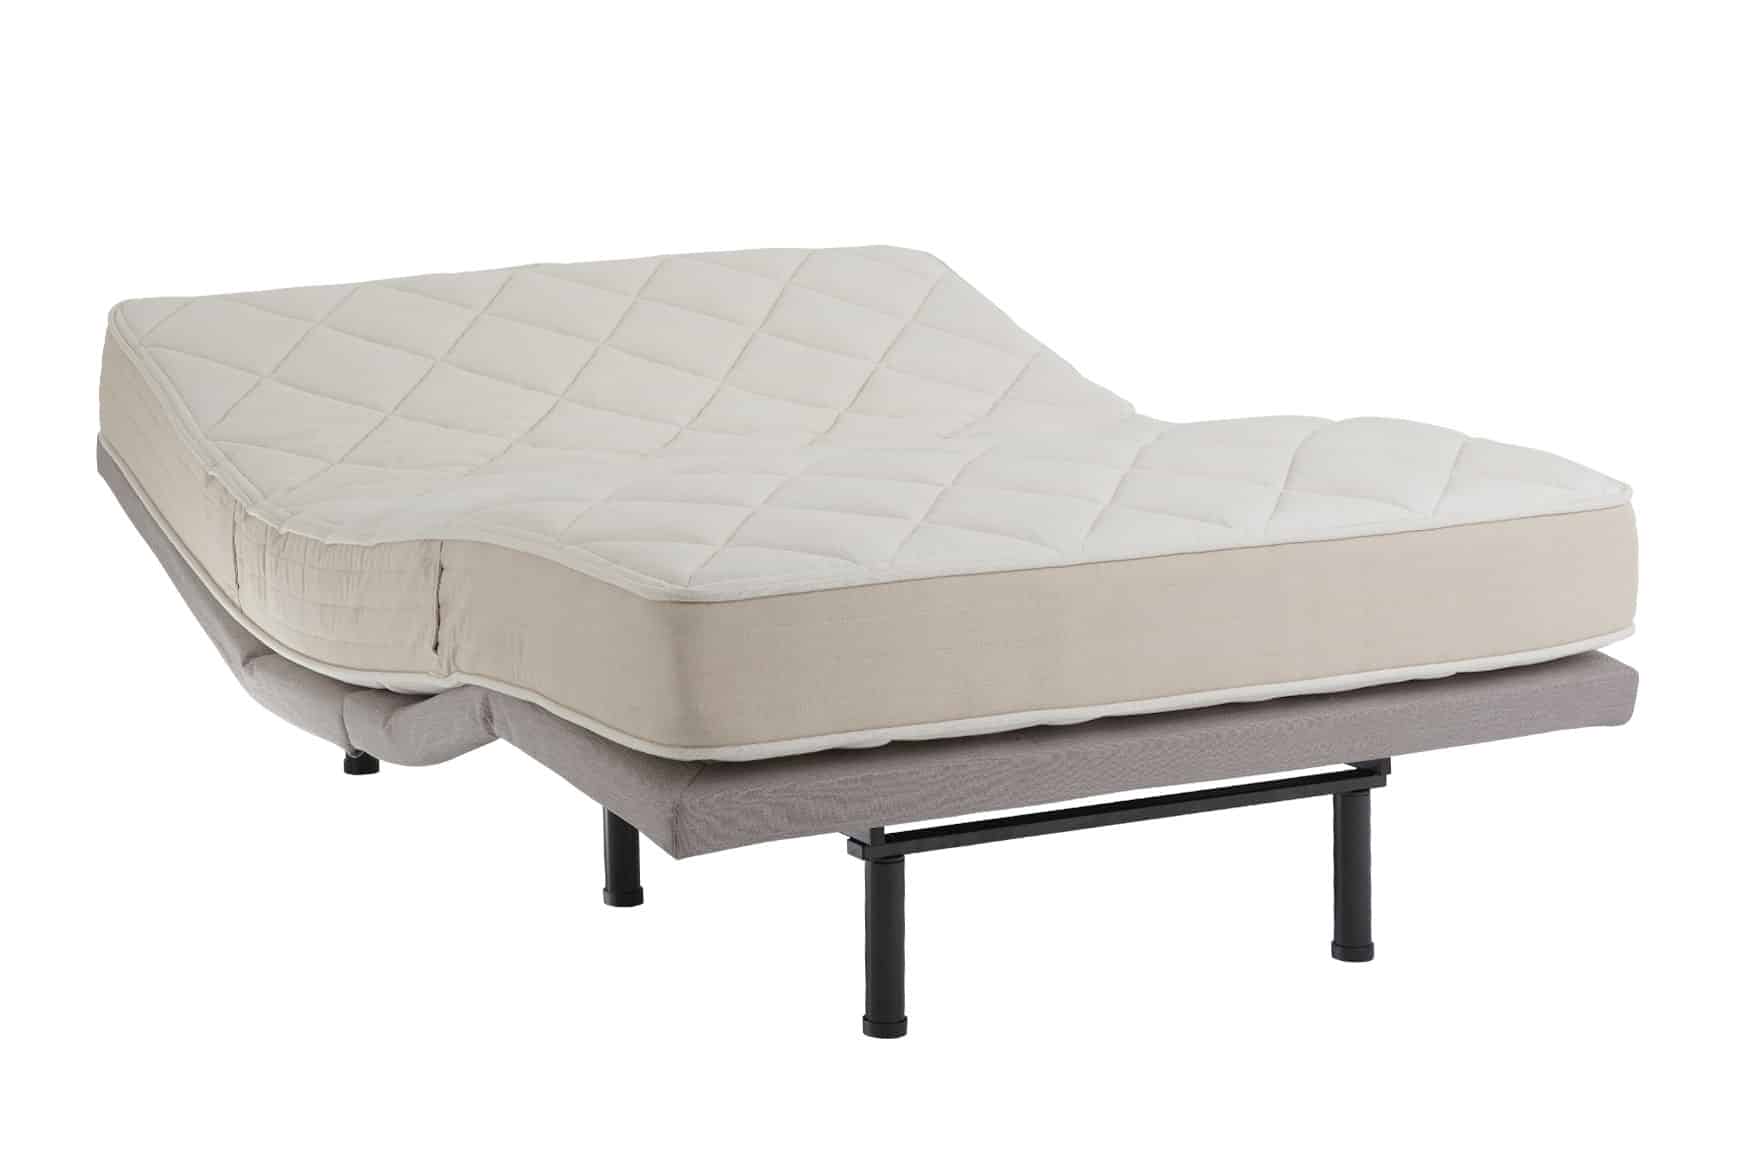 Custom Comfort A-200 Plus – Premium Wireless Adjustable Bed